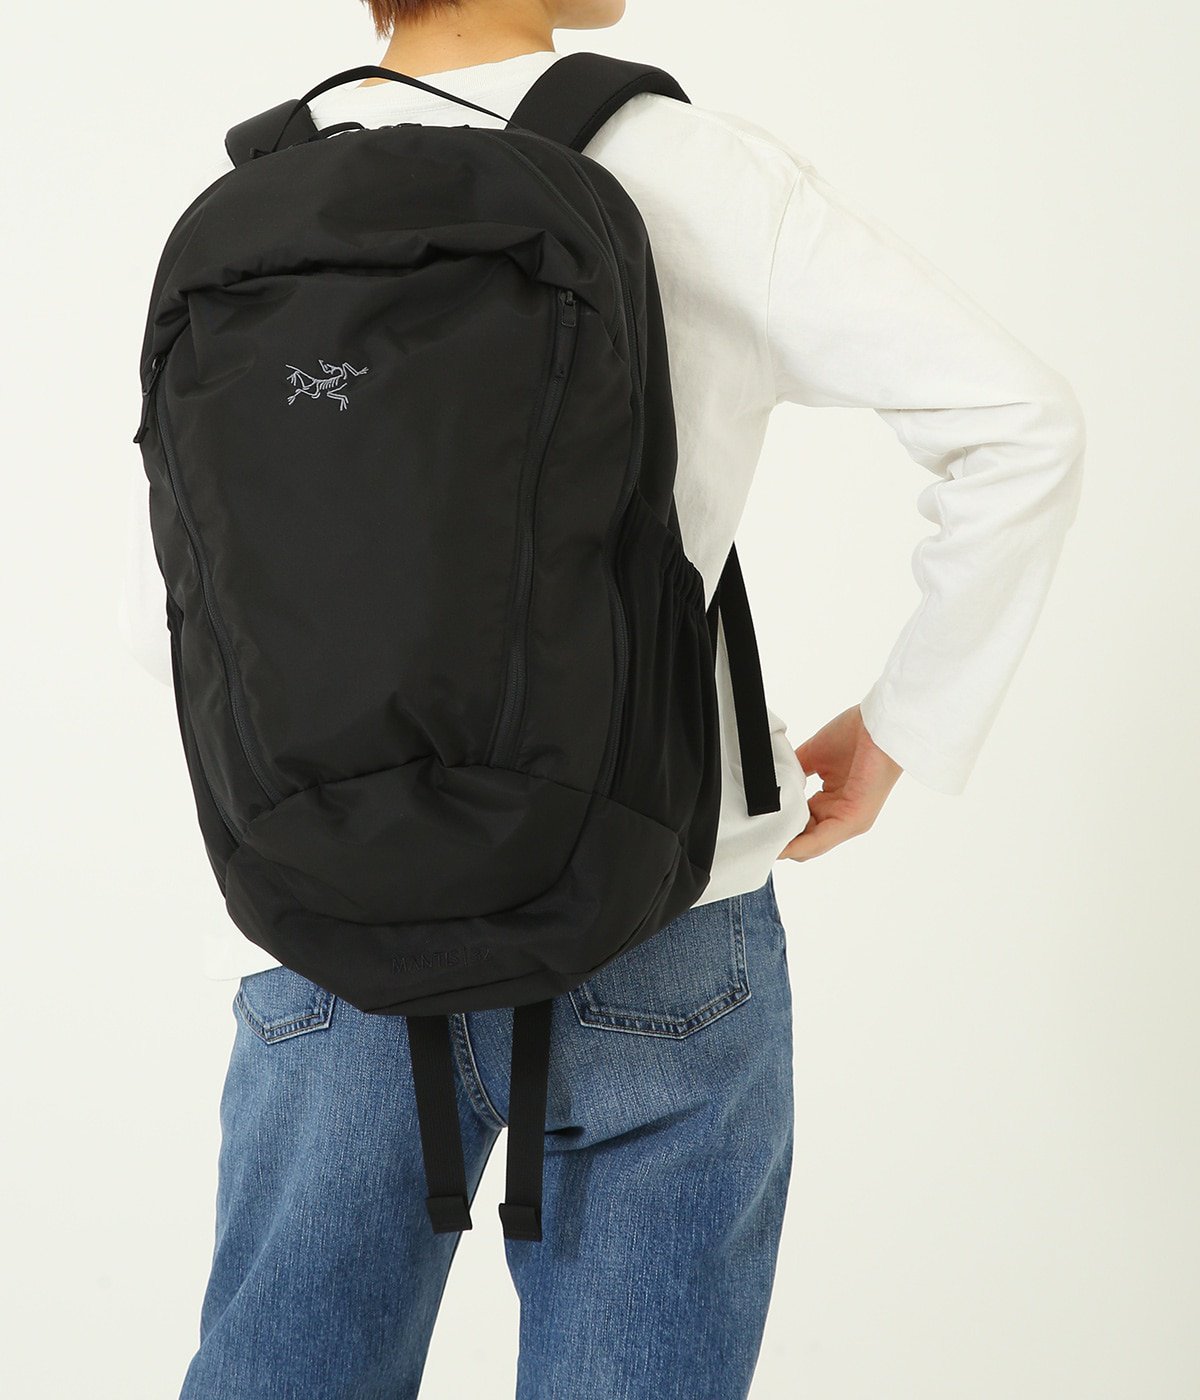 Mantis 26 Backpack | ARC’TERYX(アークテリクス) / バッグ バックパック (メンズ レディース)の通販